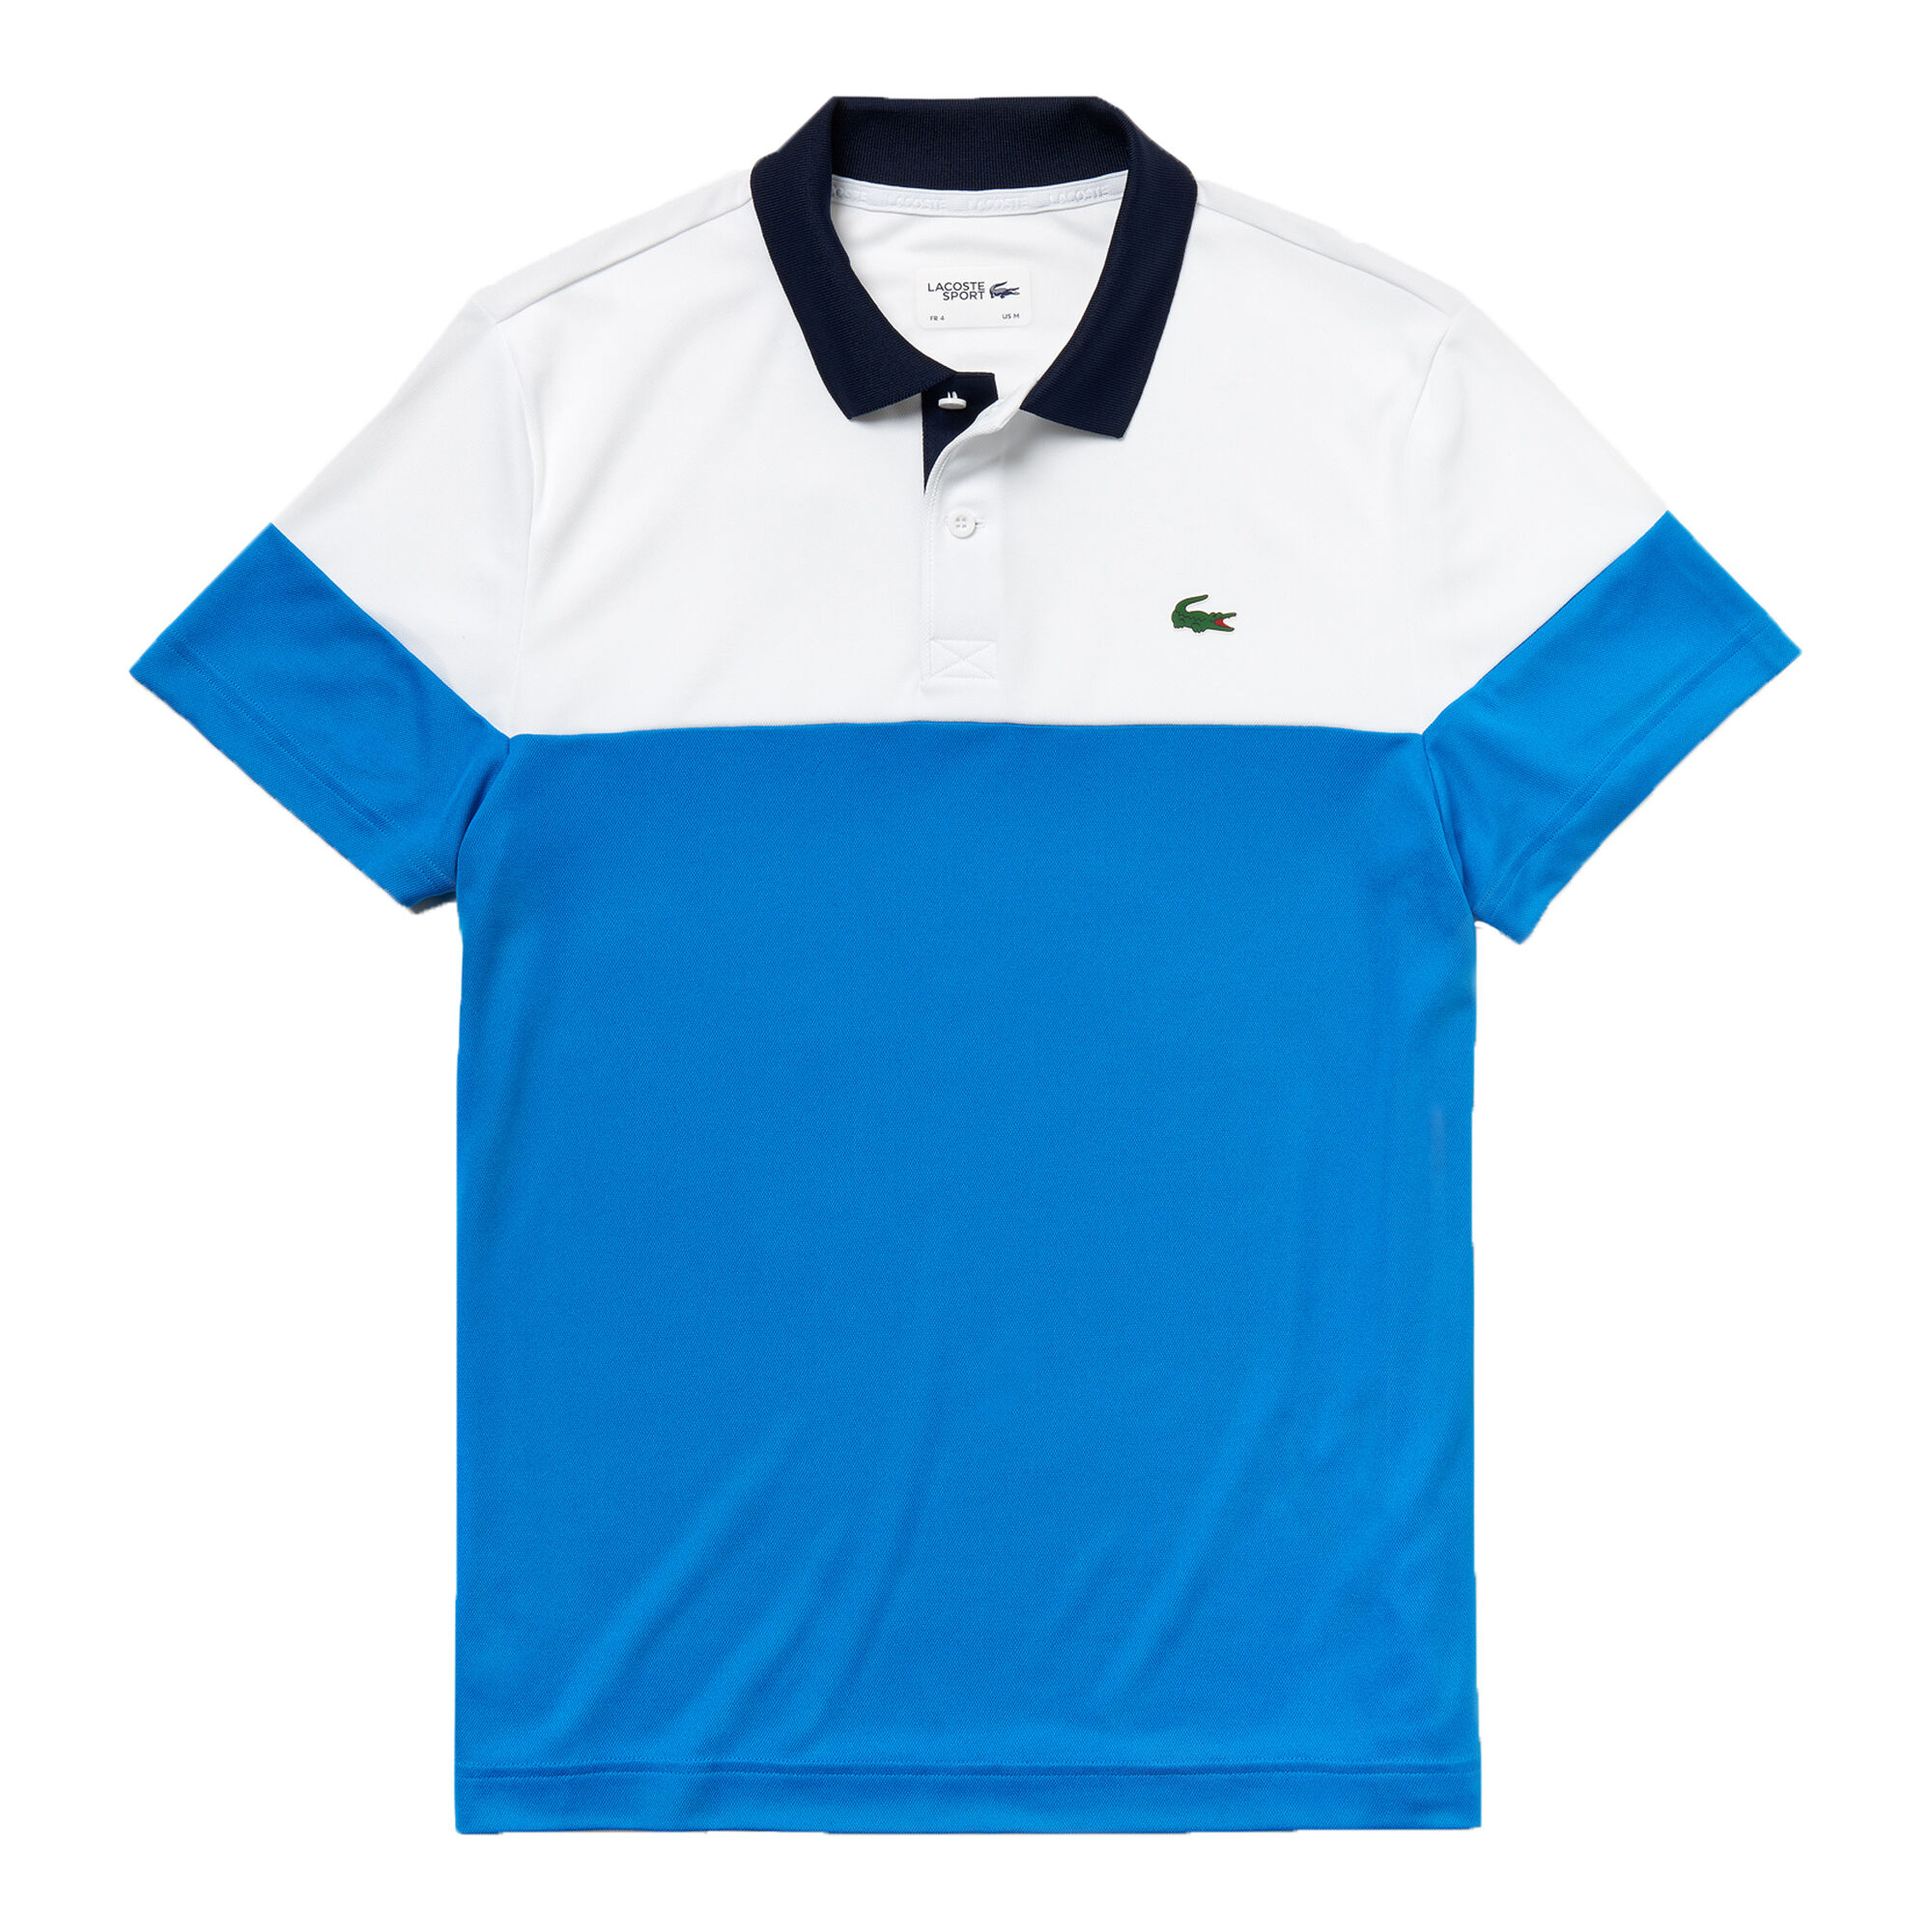 buy Lacoste Polo Men - Blue, White online | Tennis-Point